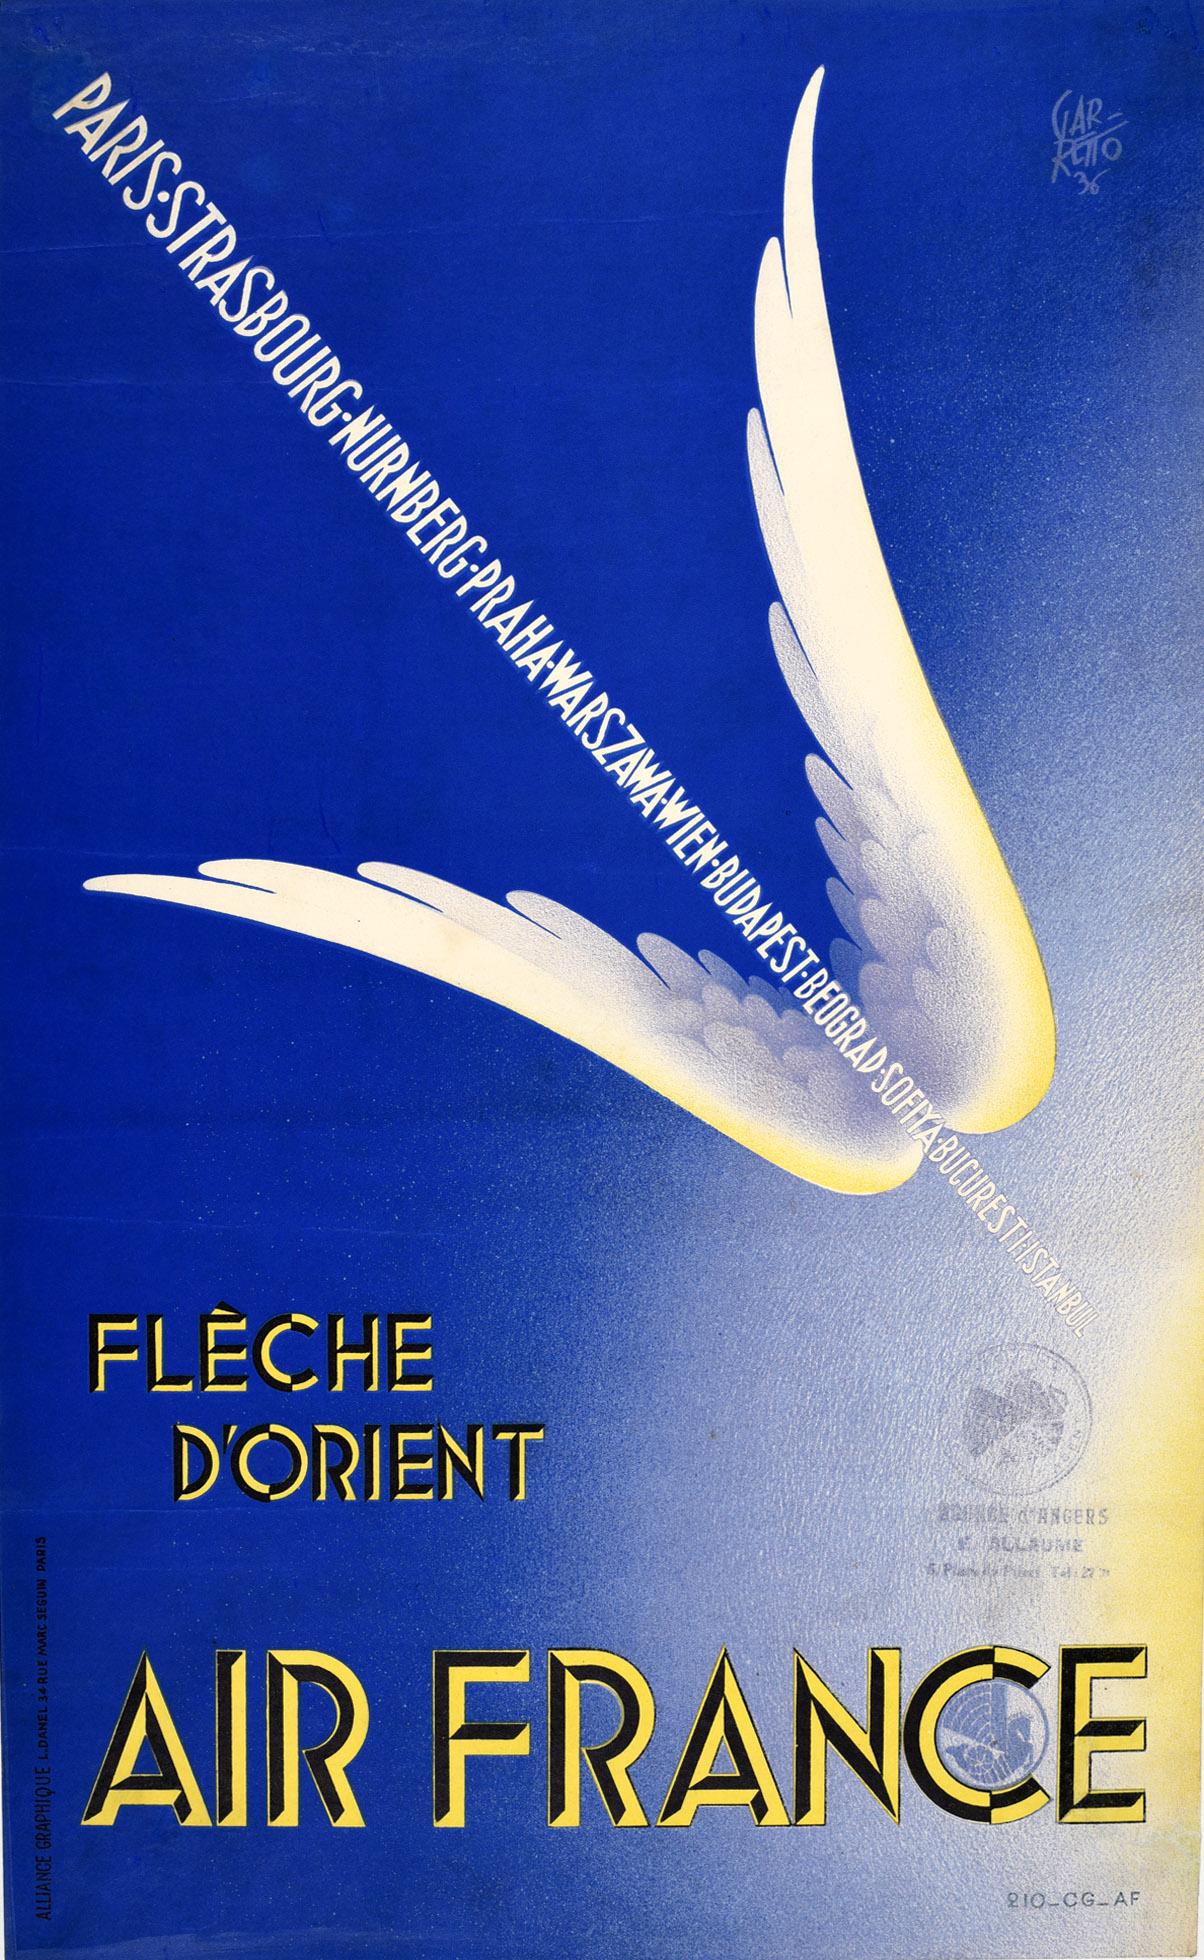 Paolo Federico Garretto Print - Original Vintage Poster Air France Fleche D'Orient Winged Arrow Design Travel